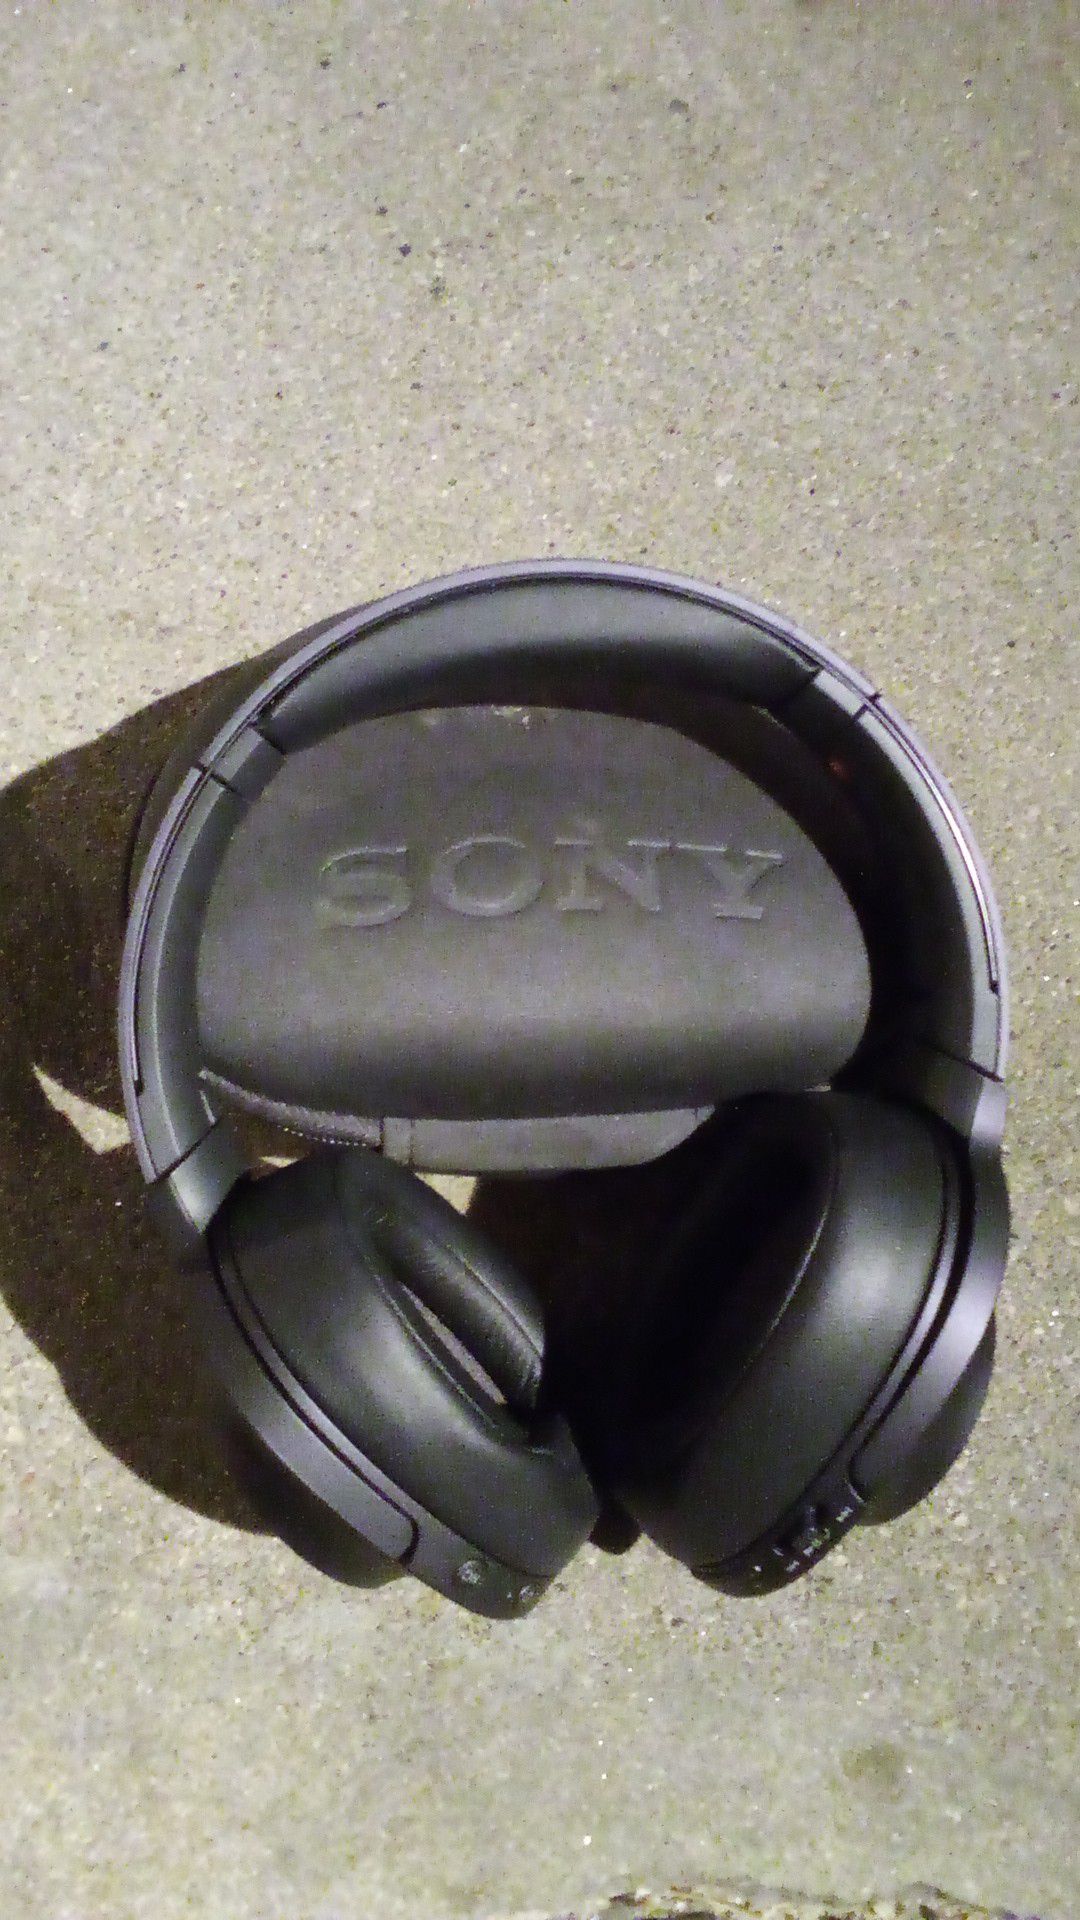 Sony wireless noise cancelling headphones